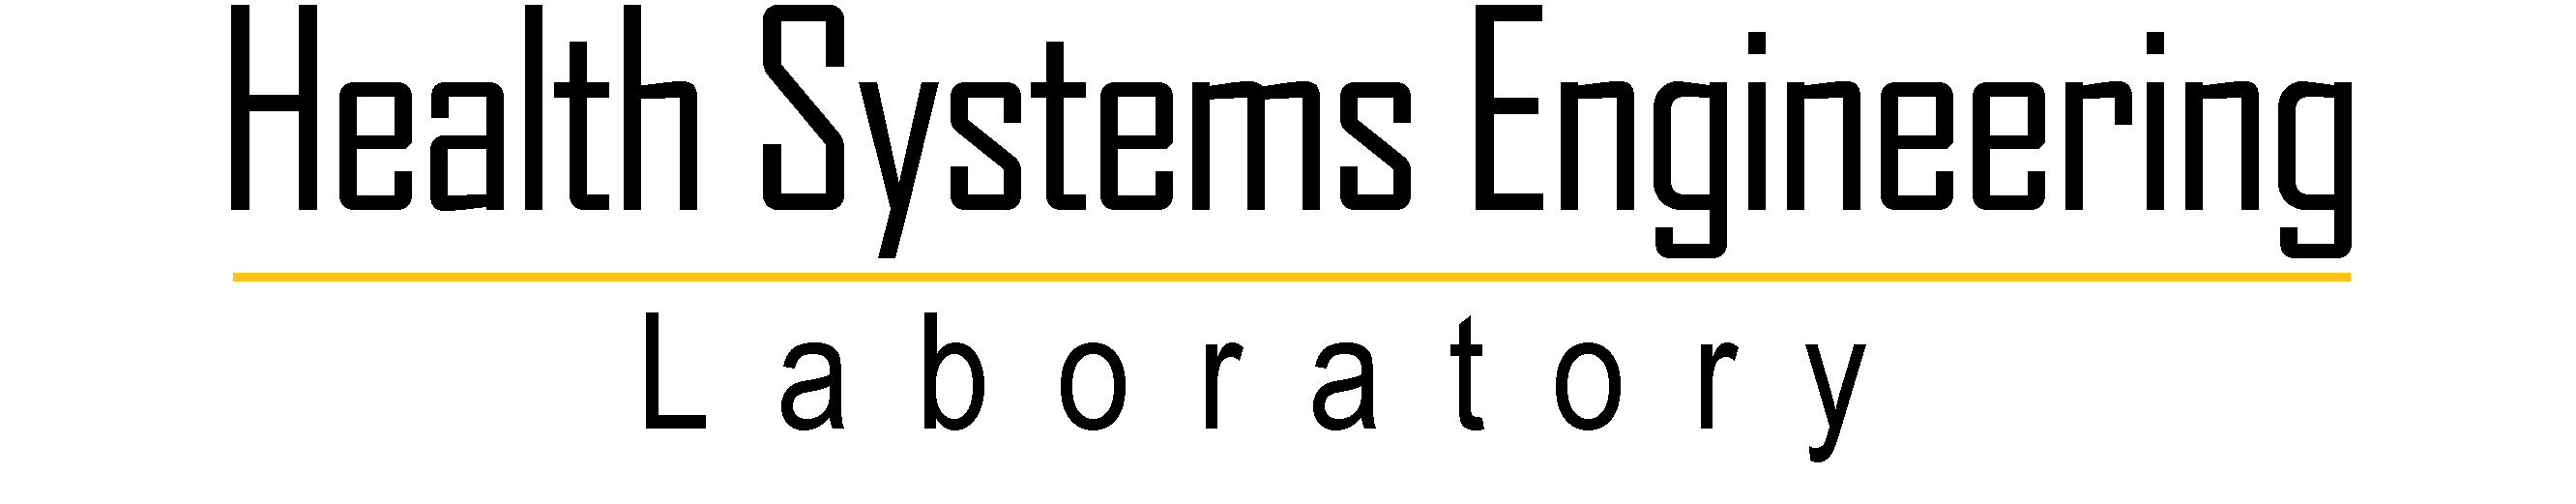 Health Systems Engineering Laboratory logo header